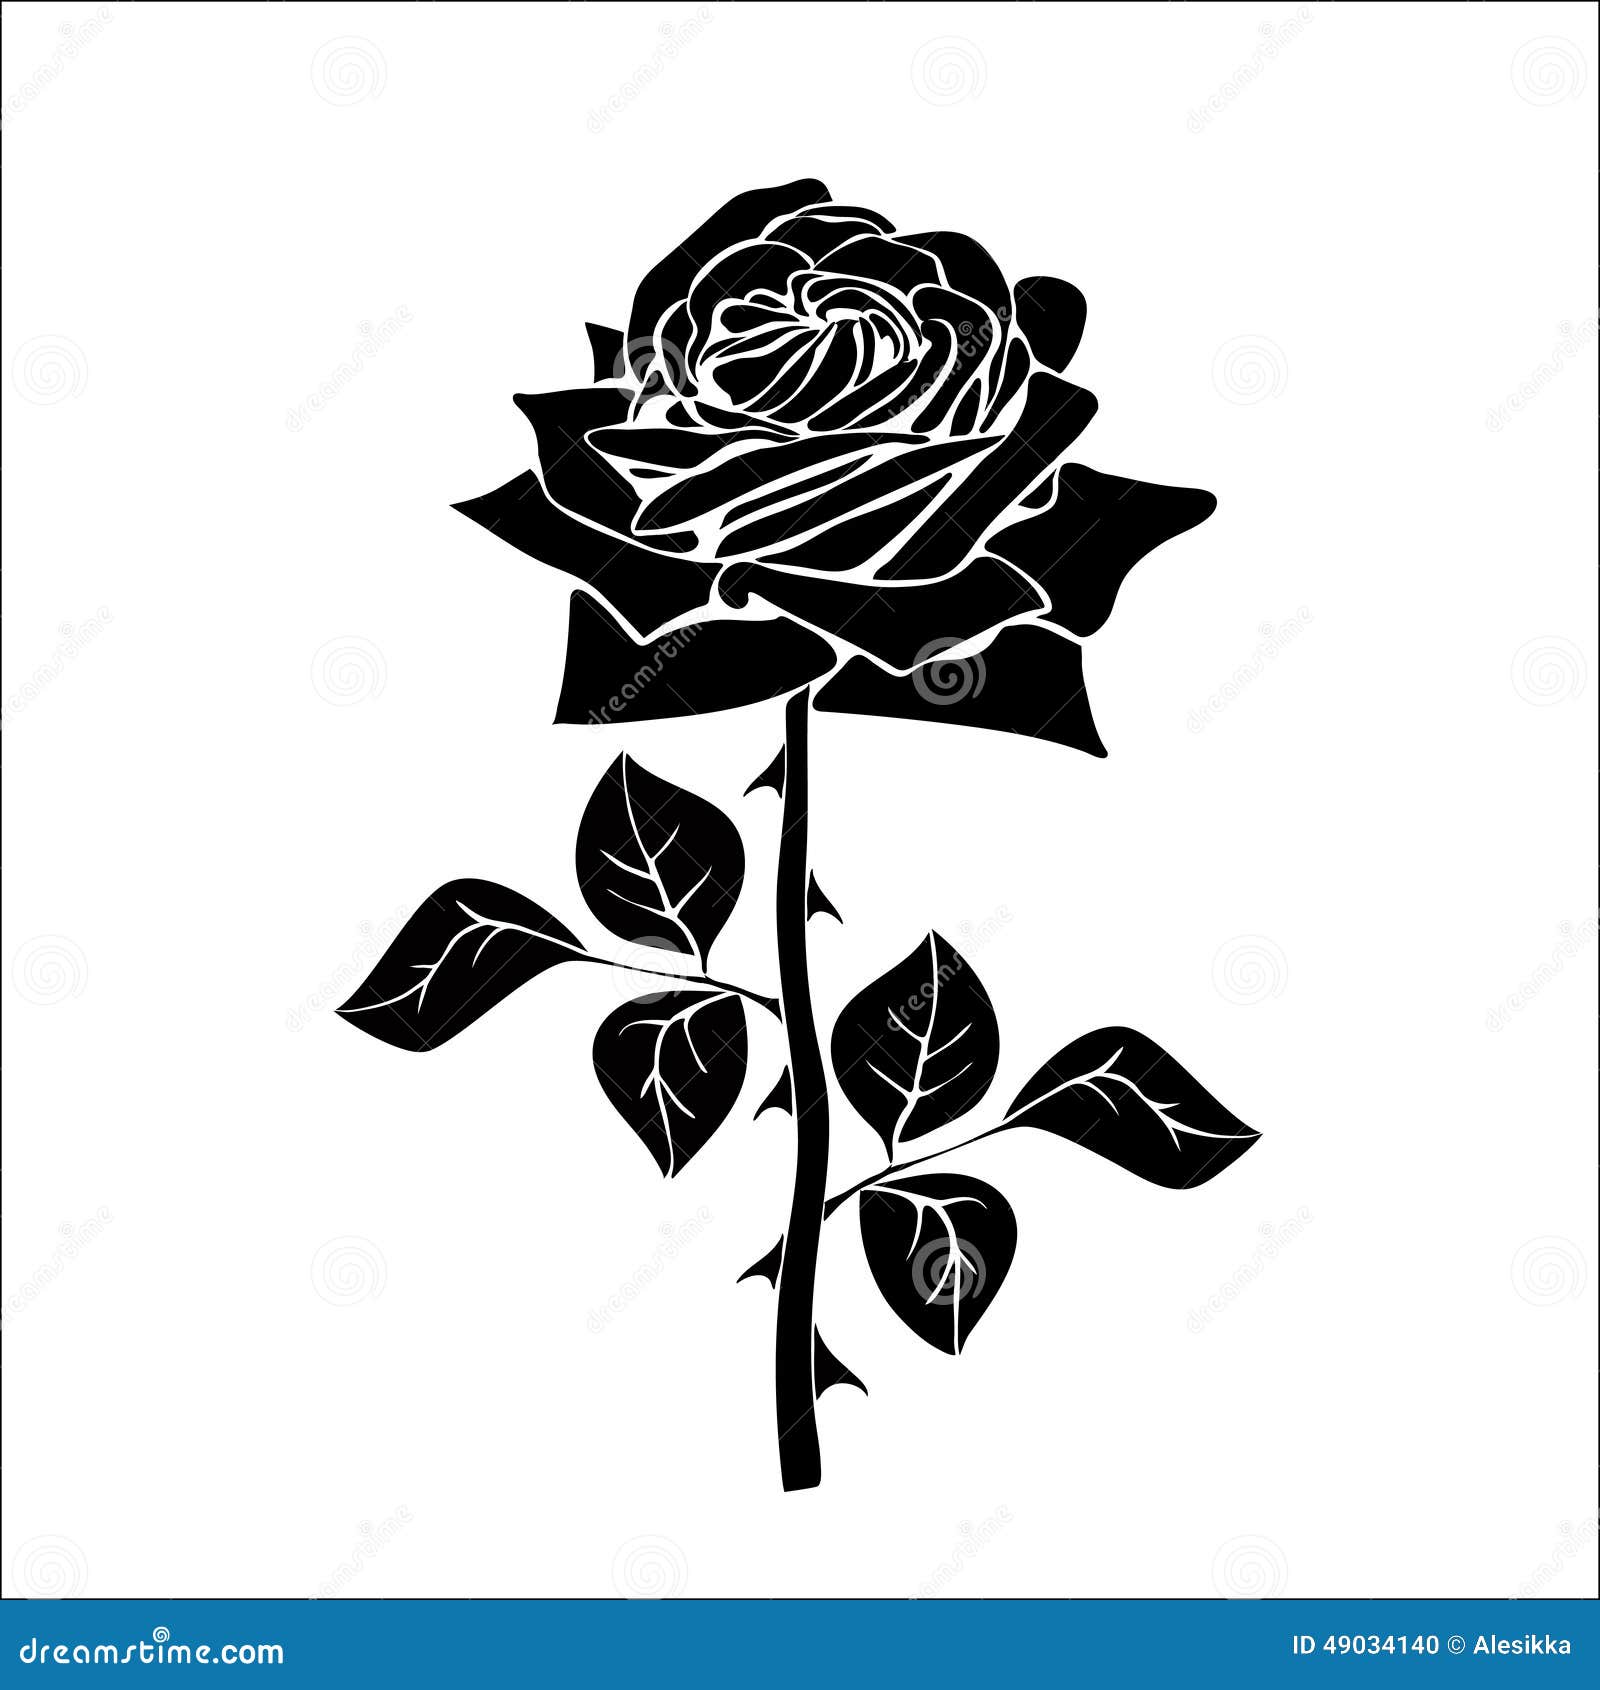 Silhouette of rose stock illustration. Illustration of beautiful - 49034140